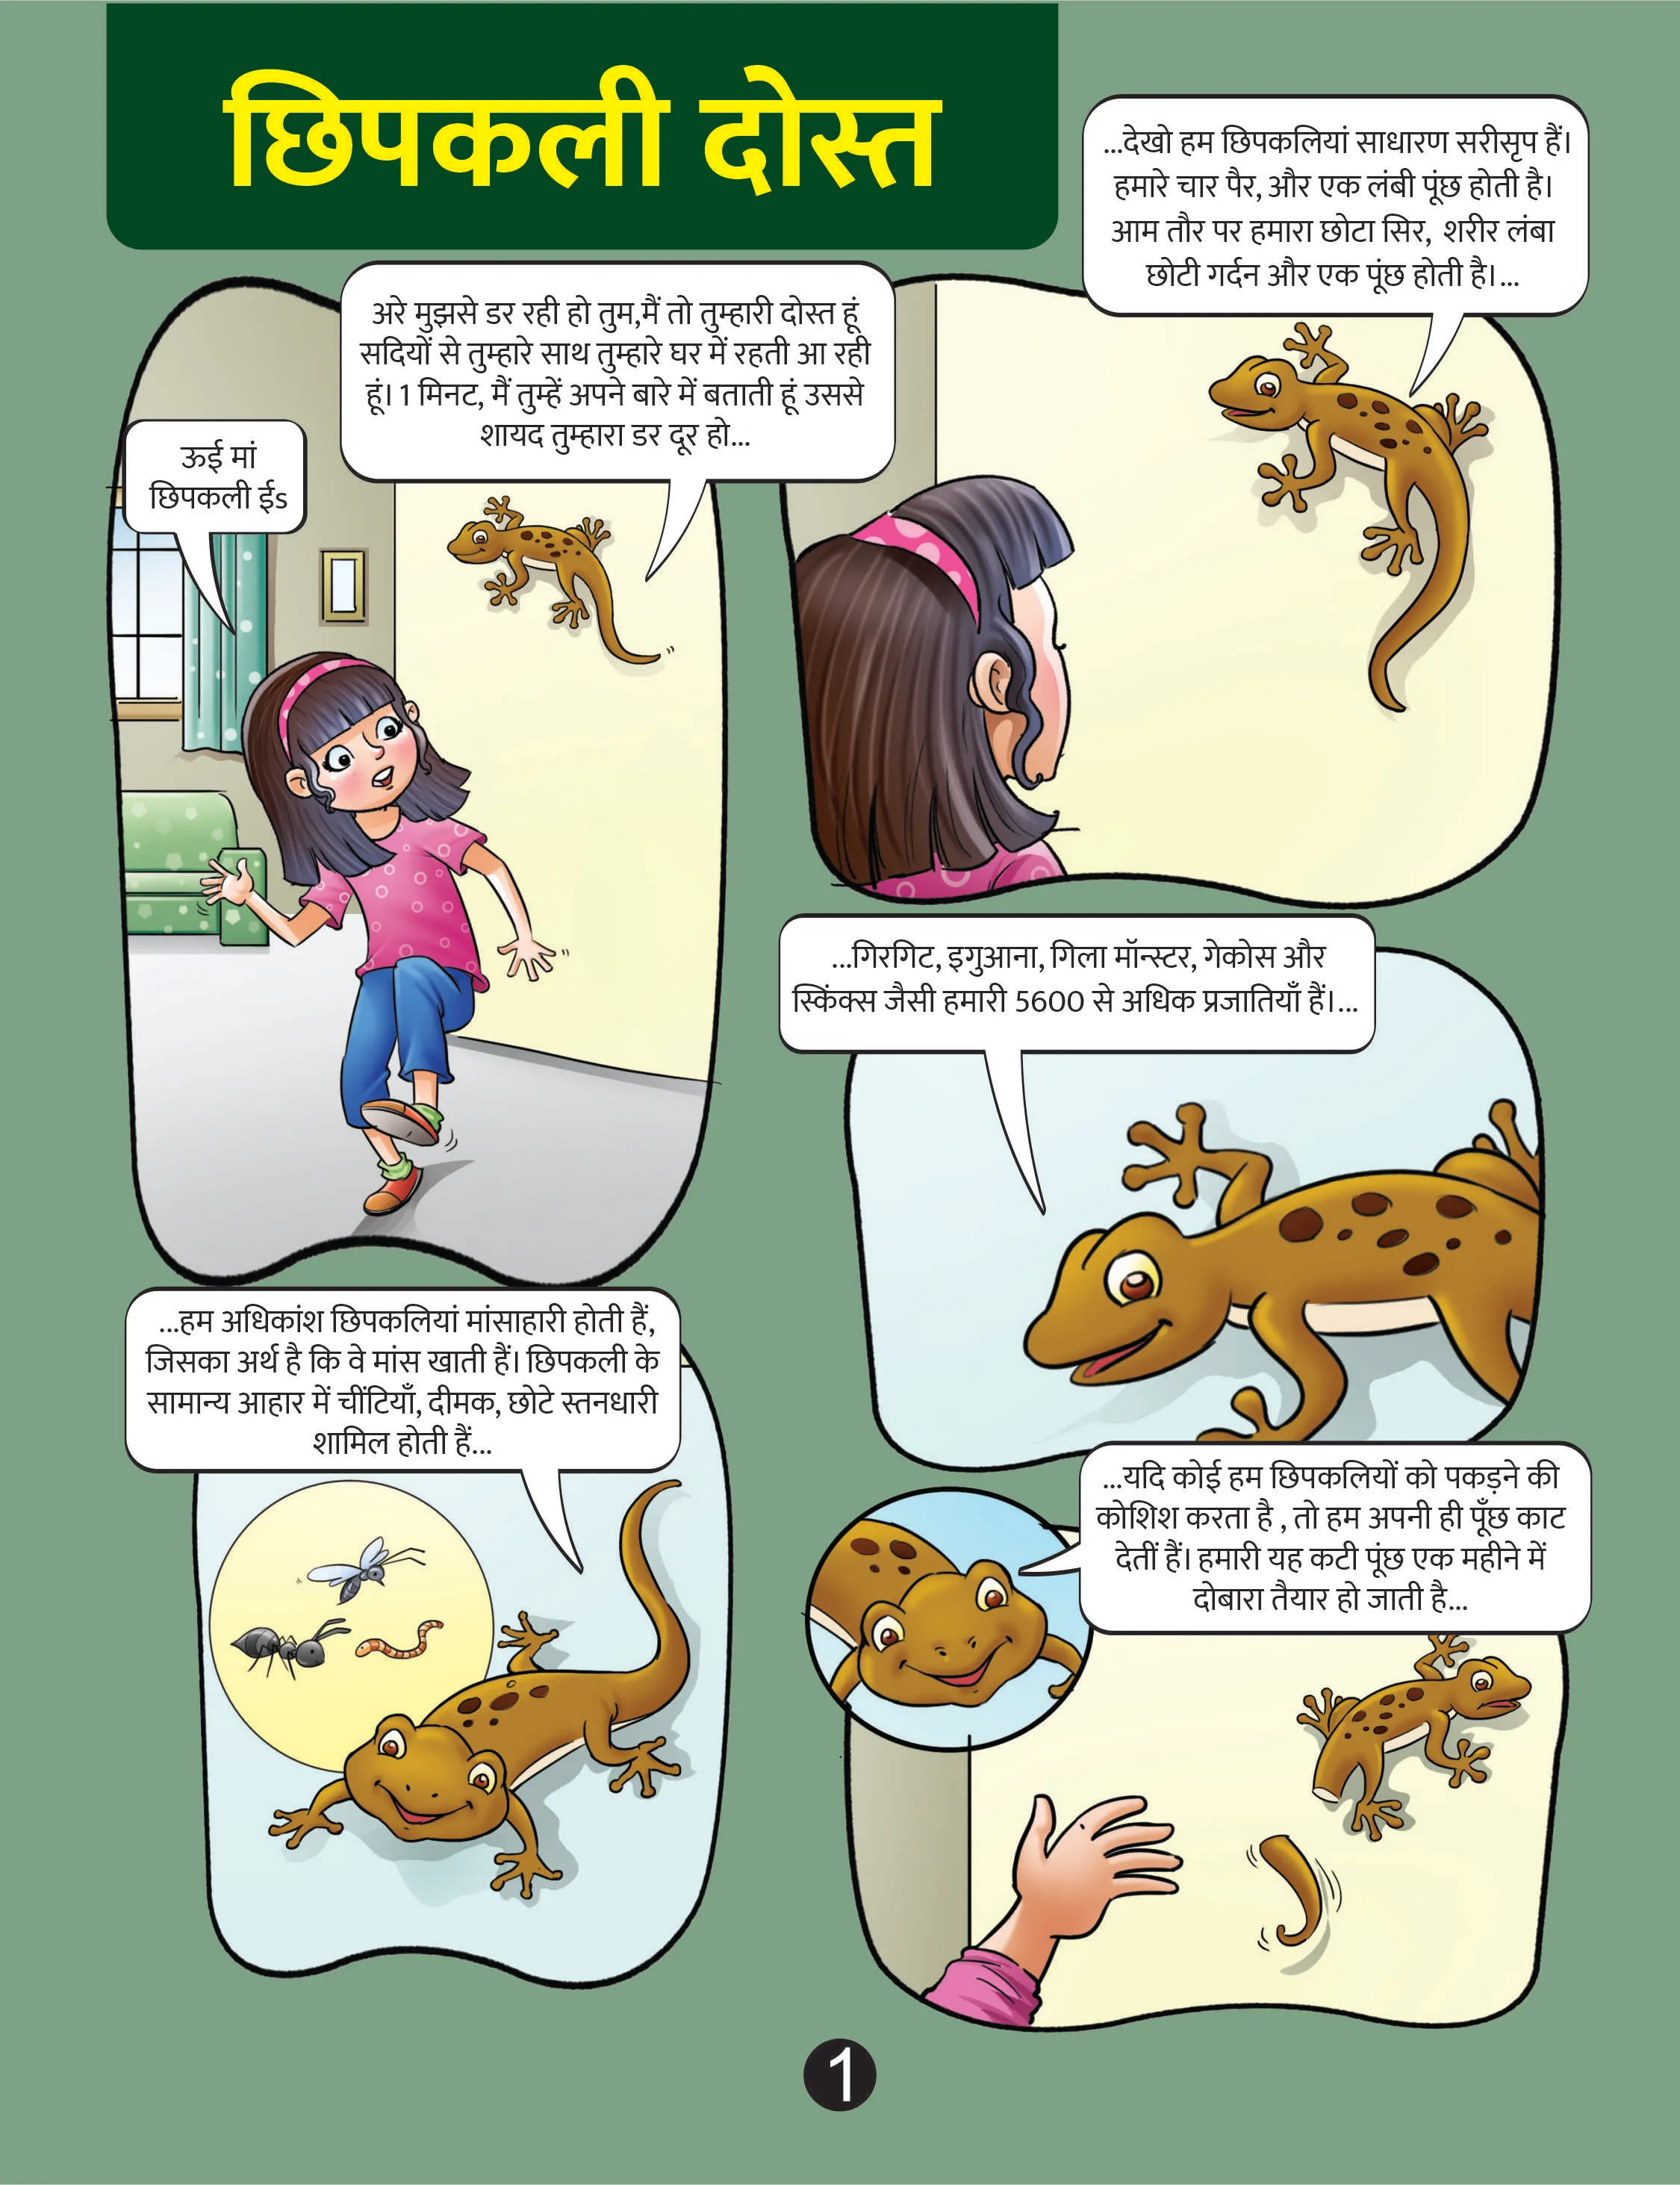 Minni and lizard cartoon image